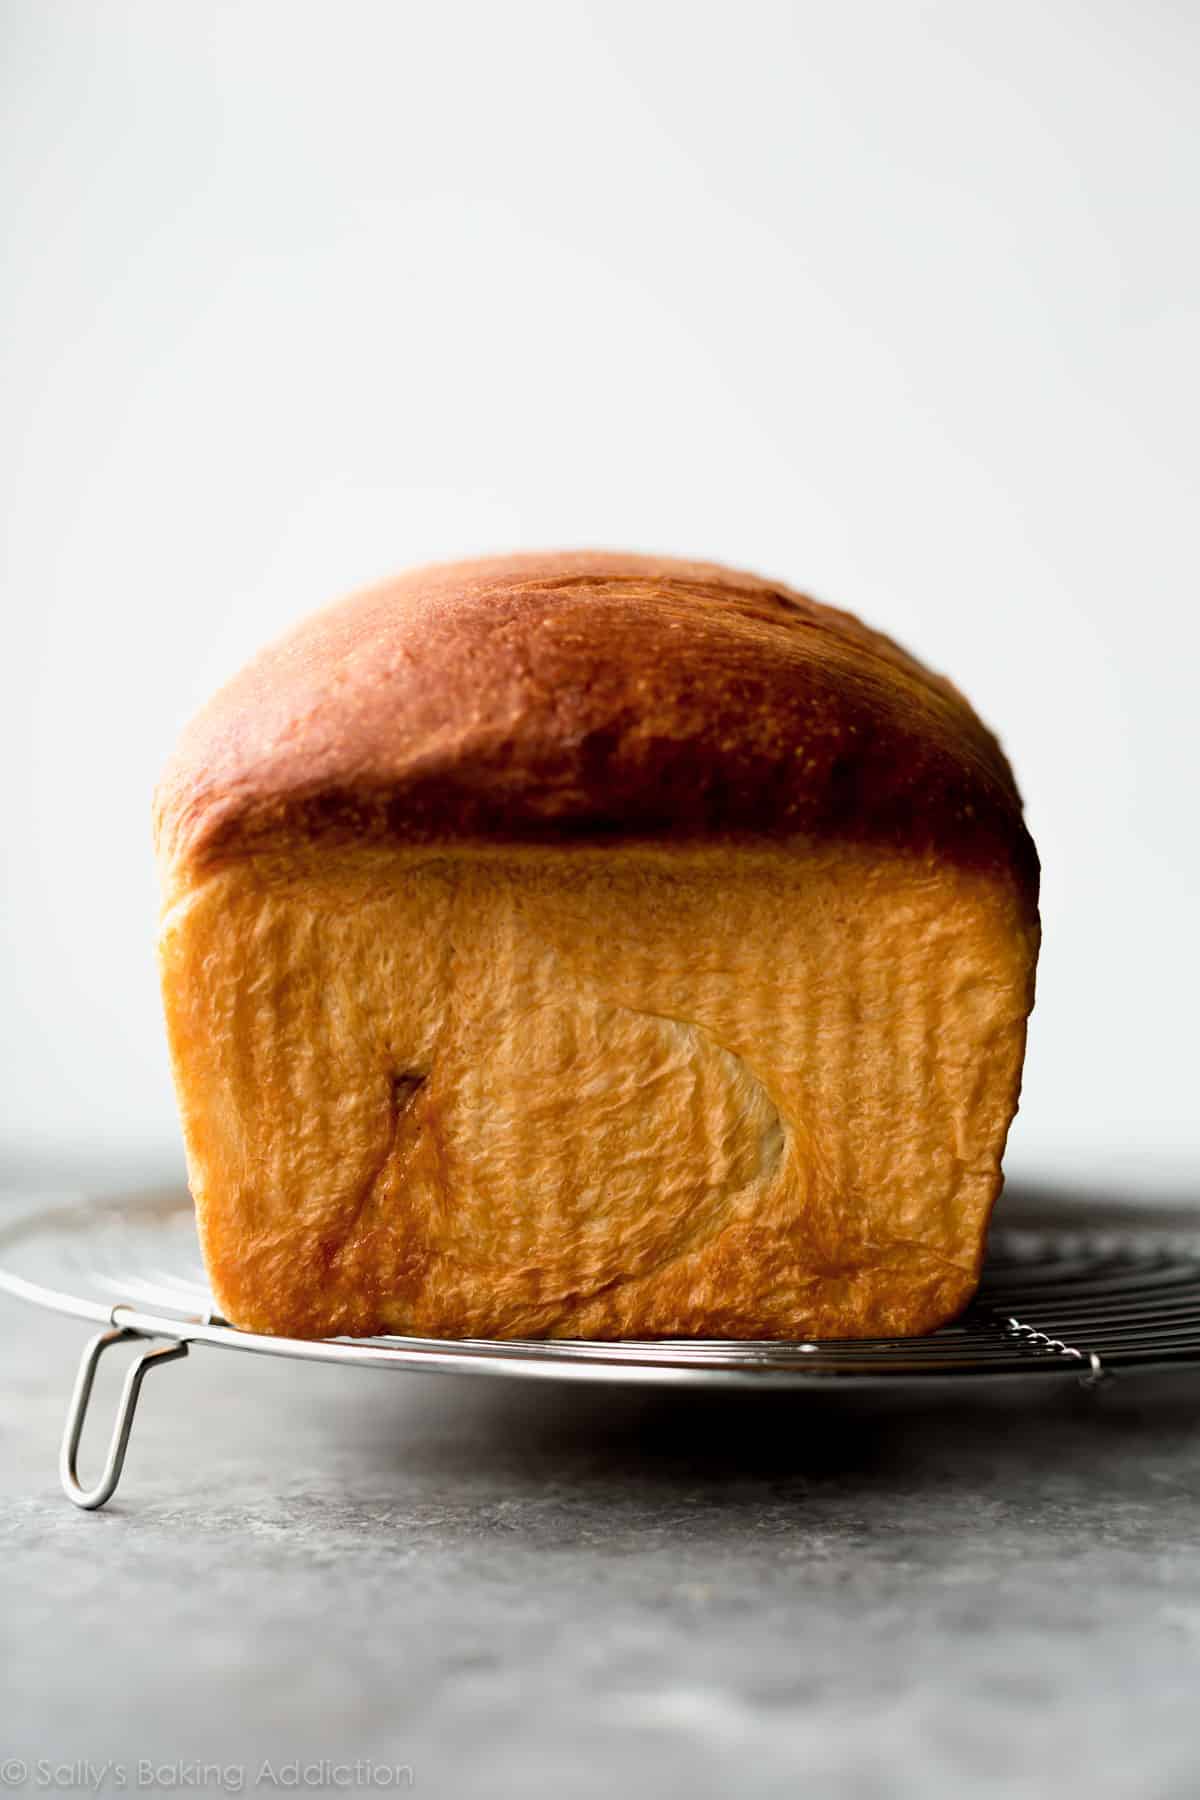 Homemade cinnamon swirl bread loaf before slicing